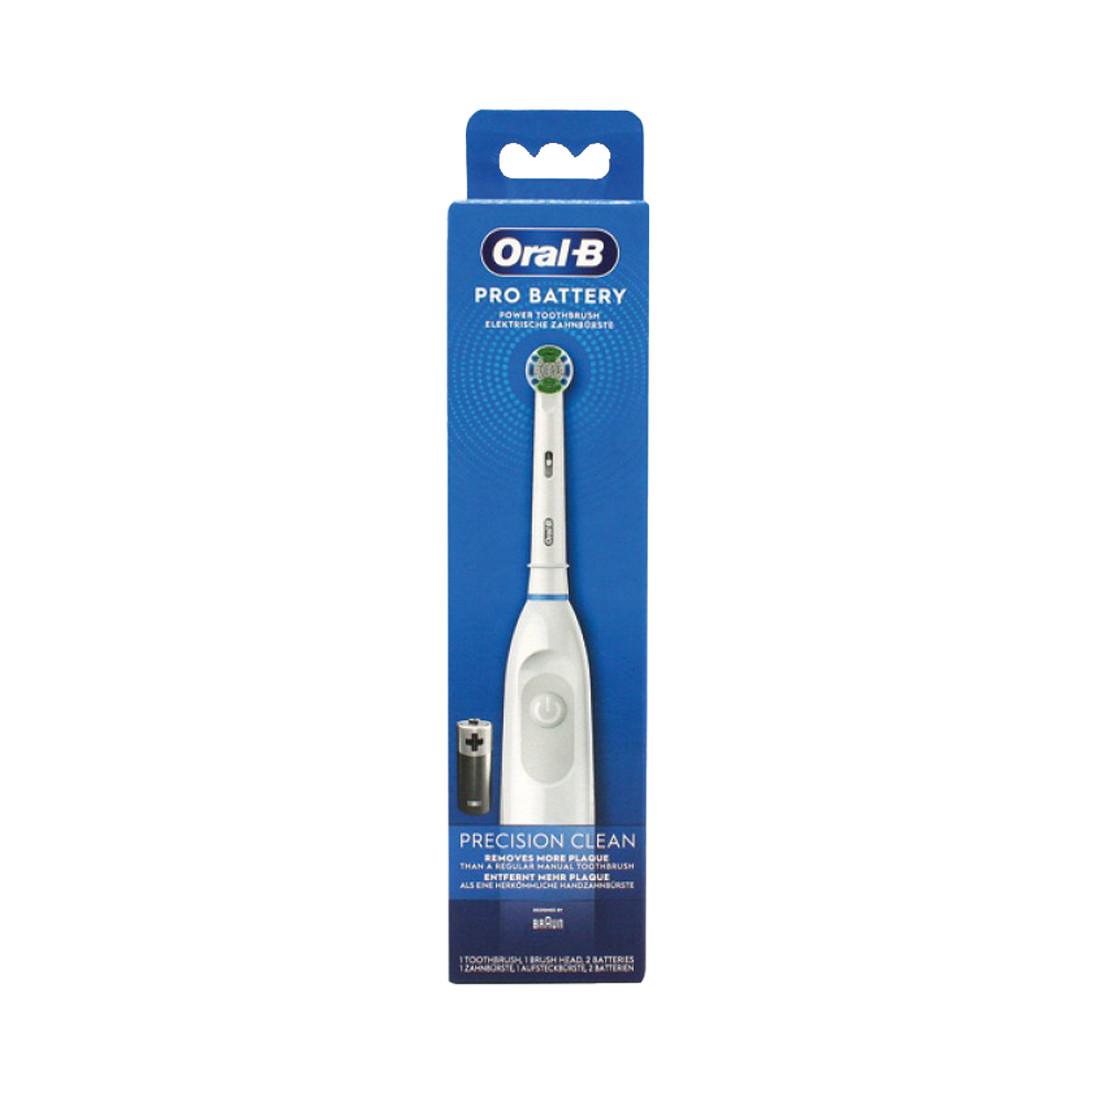 Oral B Pro Battery Precision Clean Bianco oral b